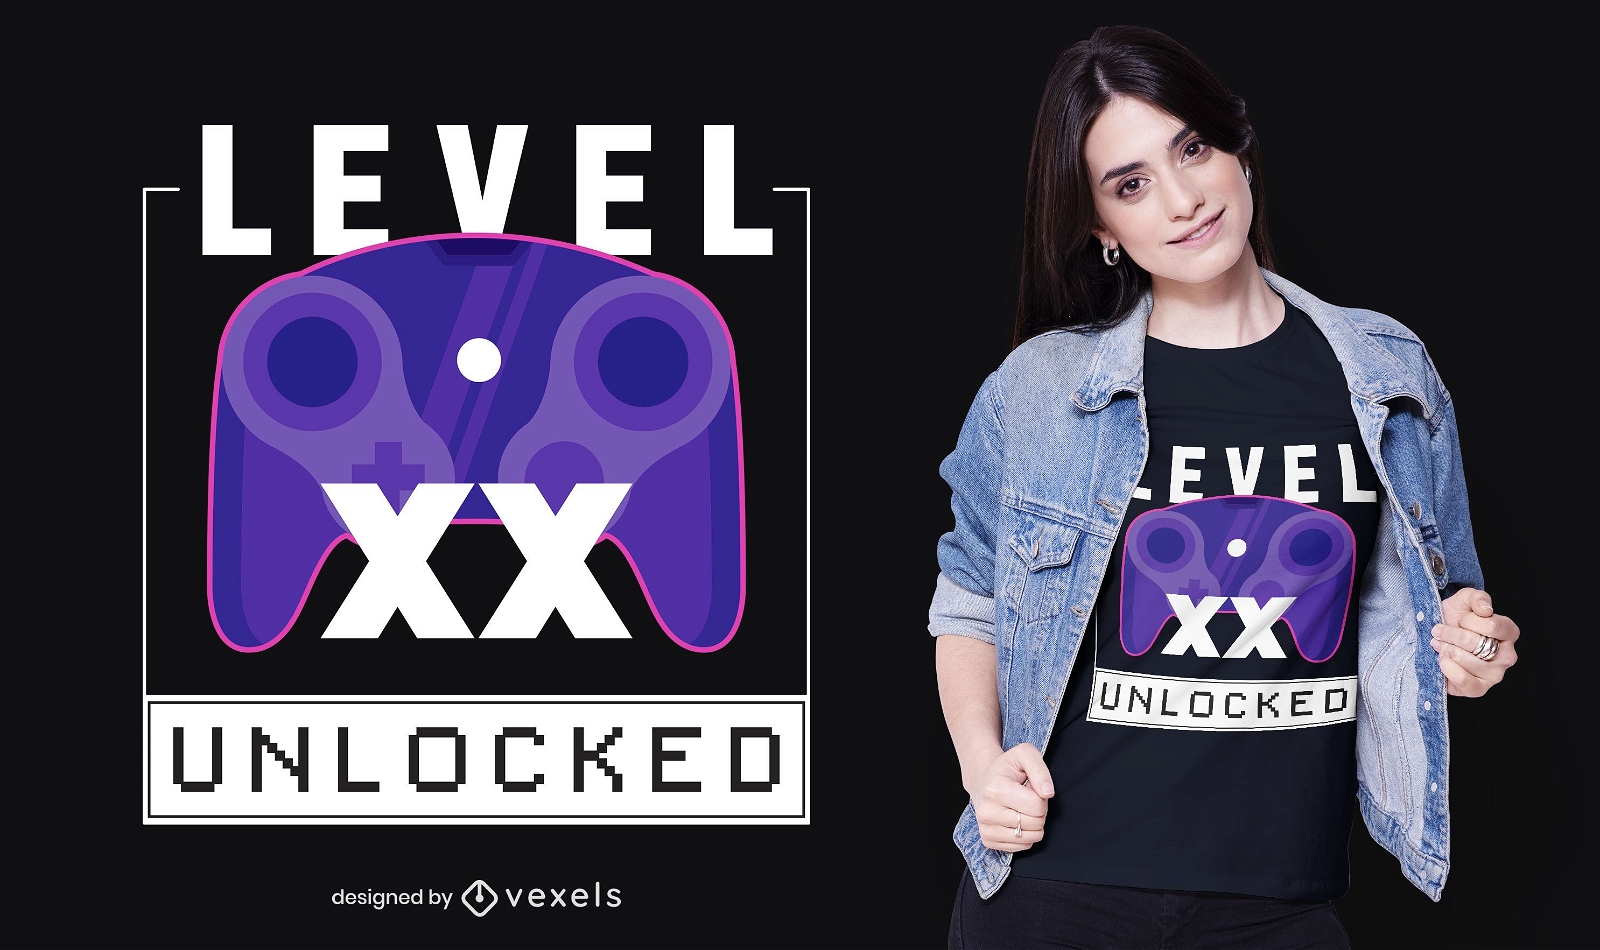 Level xx unlocked t-shirt design